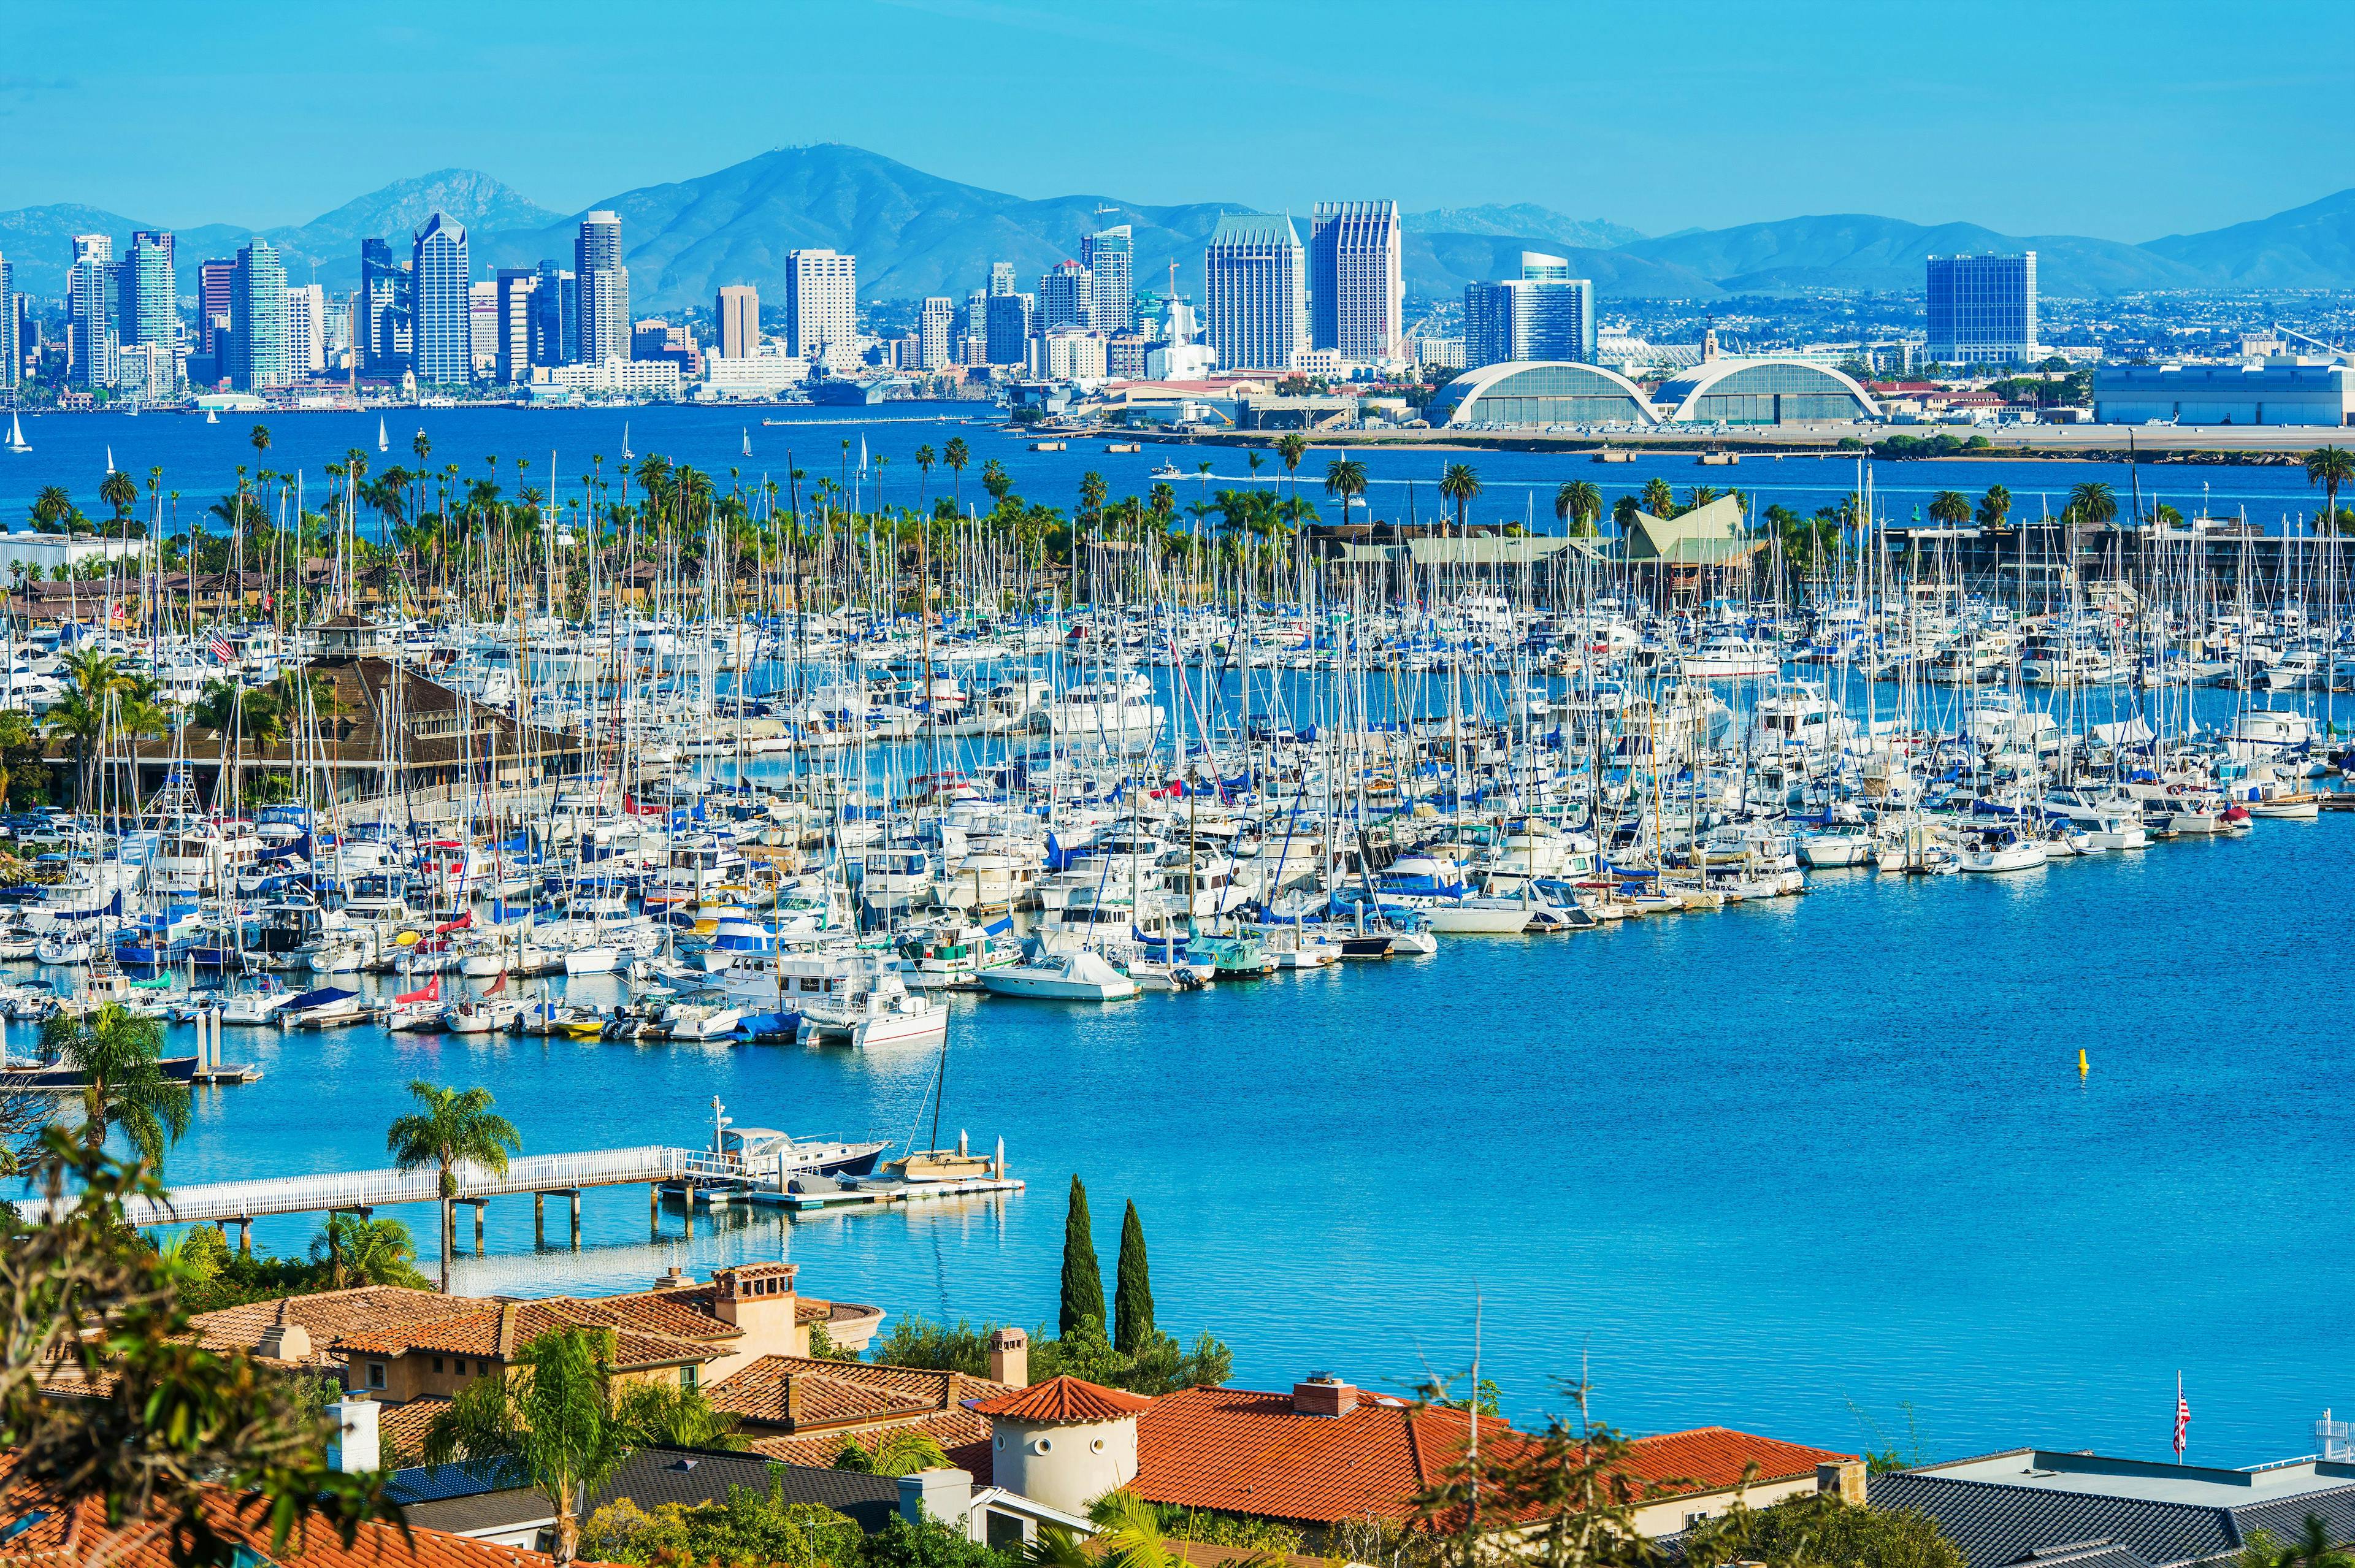 Panorama of San Diego | Image Credit: © Tomasz Zajda - stock.adobe.com.